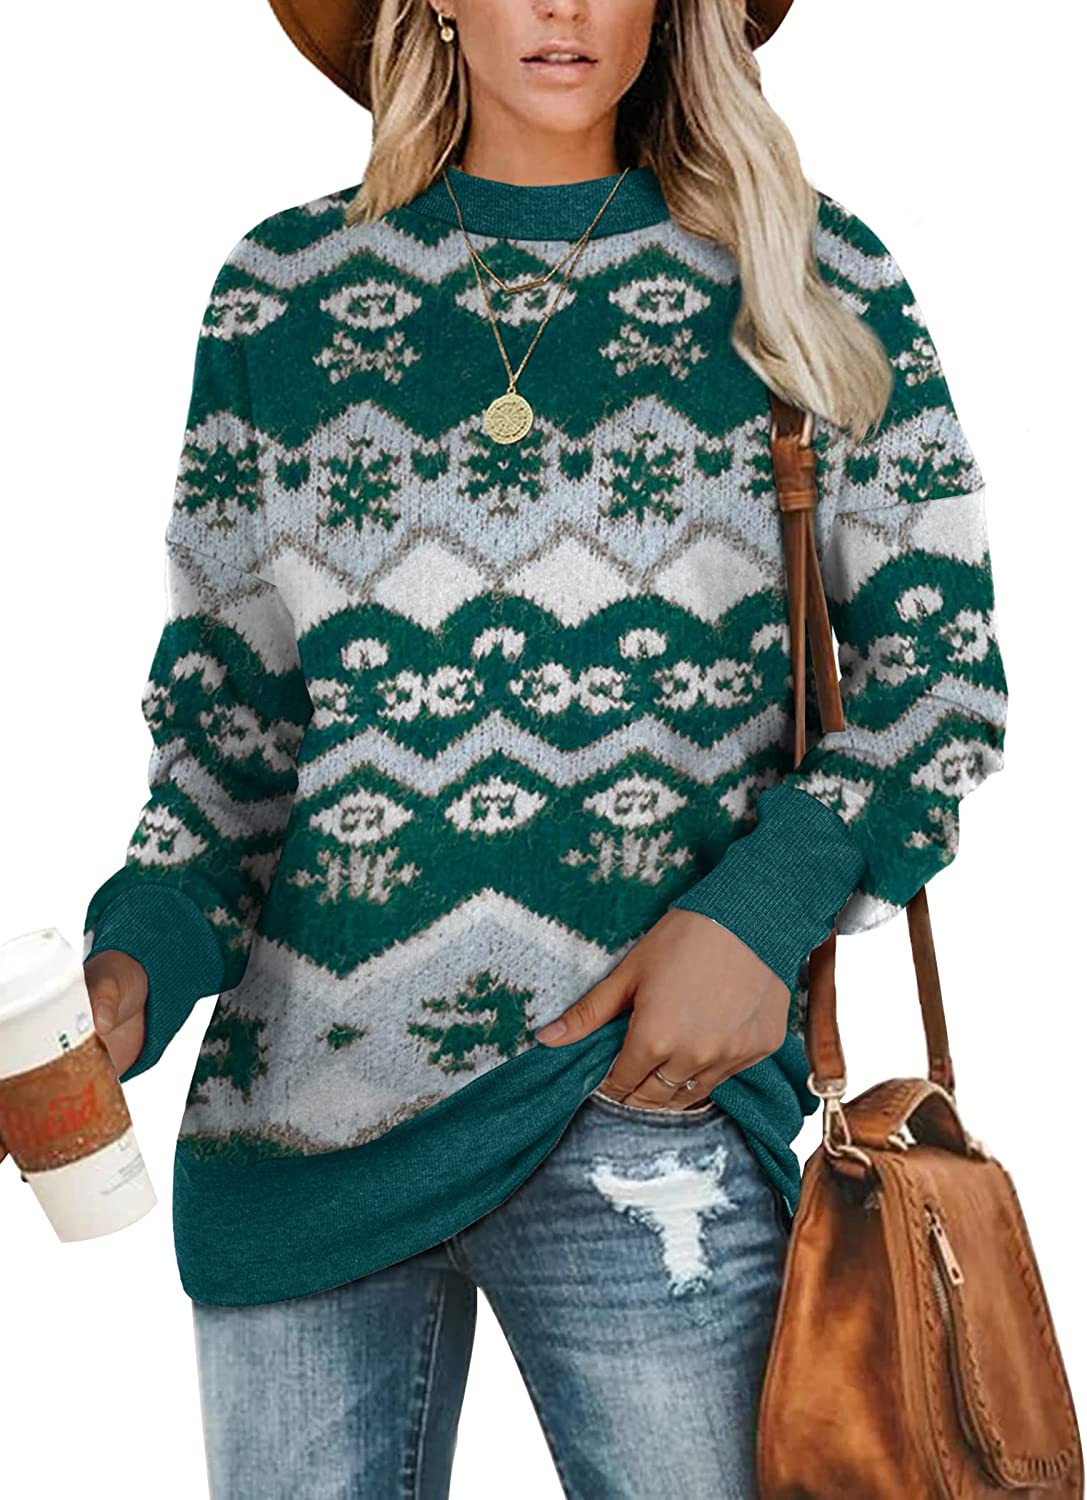 Buy Geifa Crewneck Sweatshirts for Women Oversized Sweaters Long